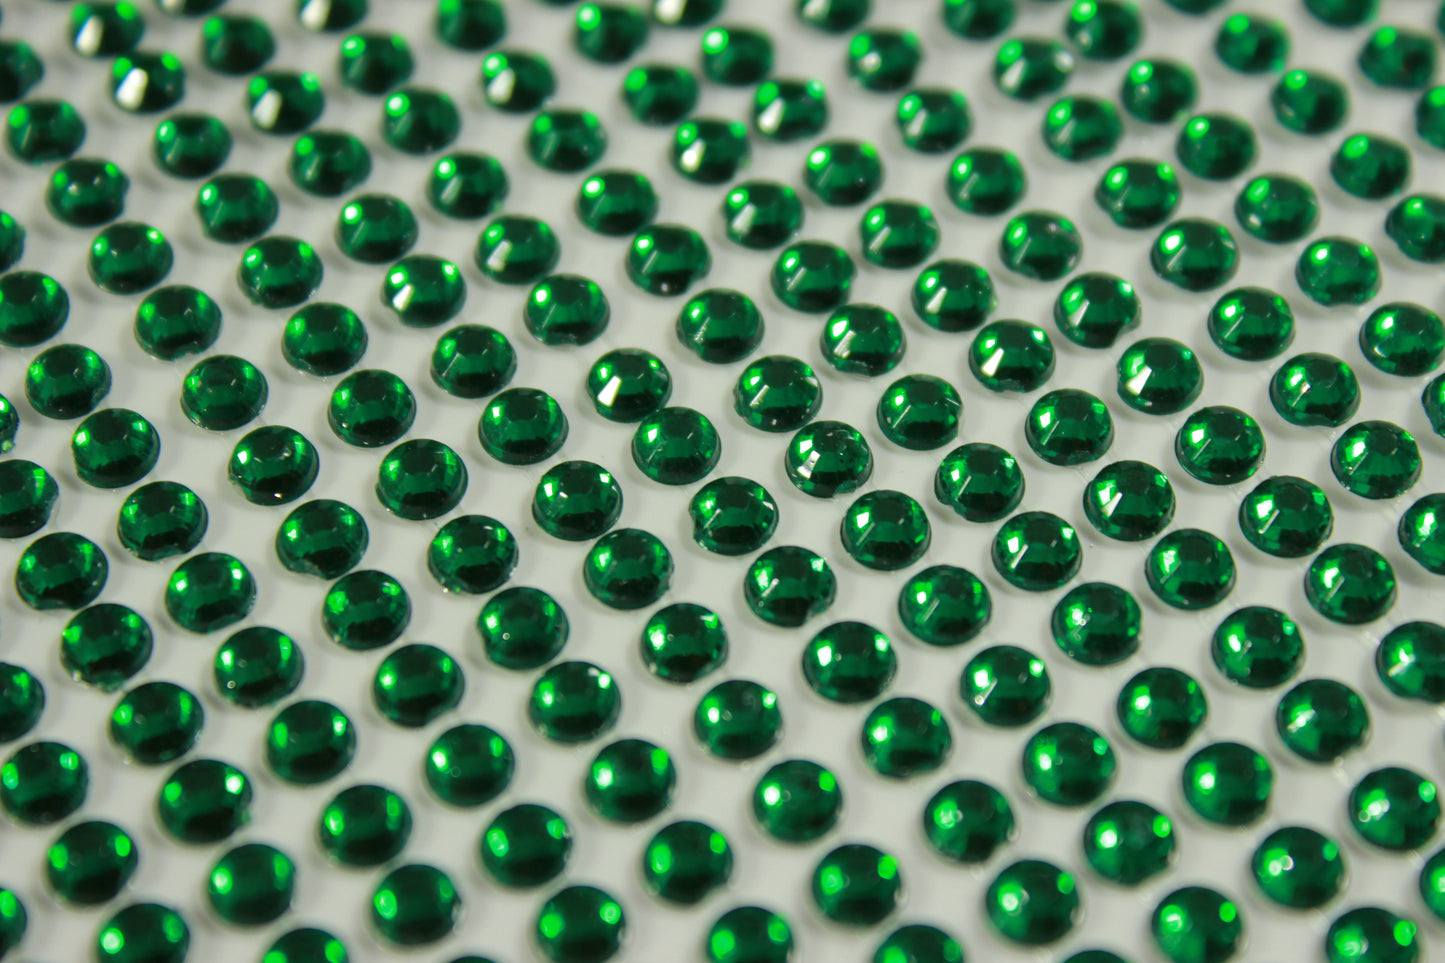 504pcs X 6mm Assorted Colours Rhinestone Gems Self Adhesive Stick on Crystals